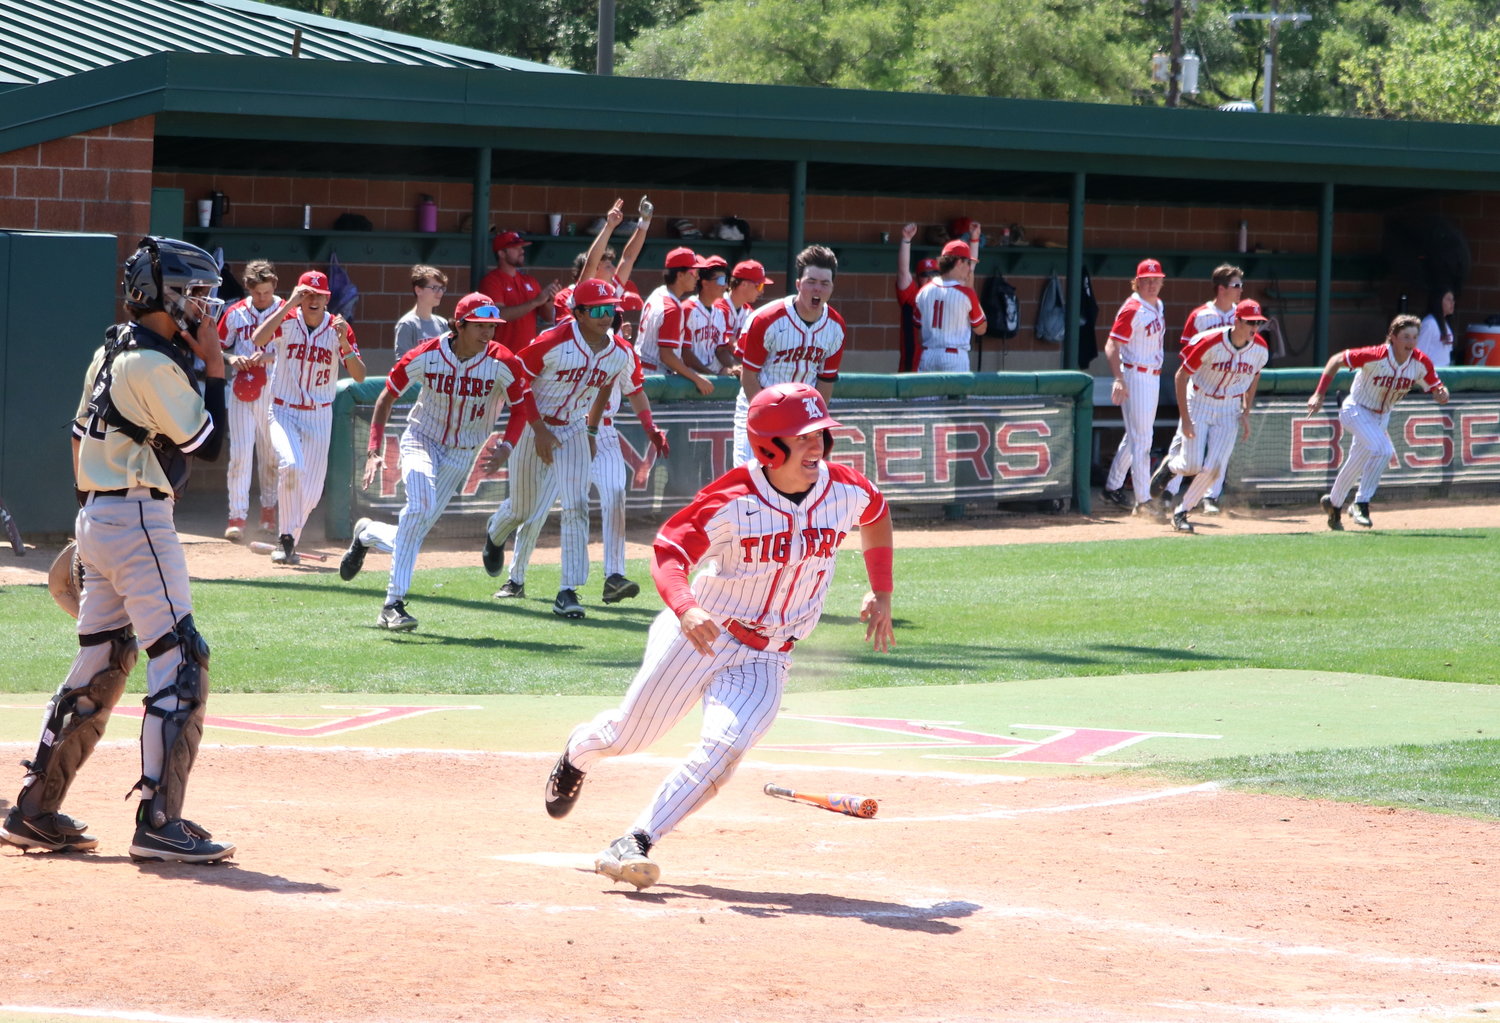 Brady Englett runs to celebrate after scoring the game winning run during Saturday's game between Katy and Jordan at the Katy baseball field.